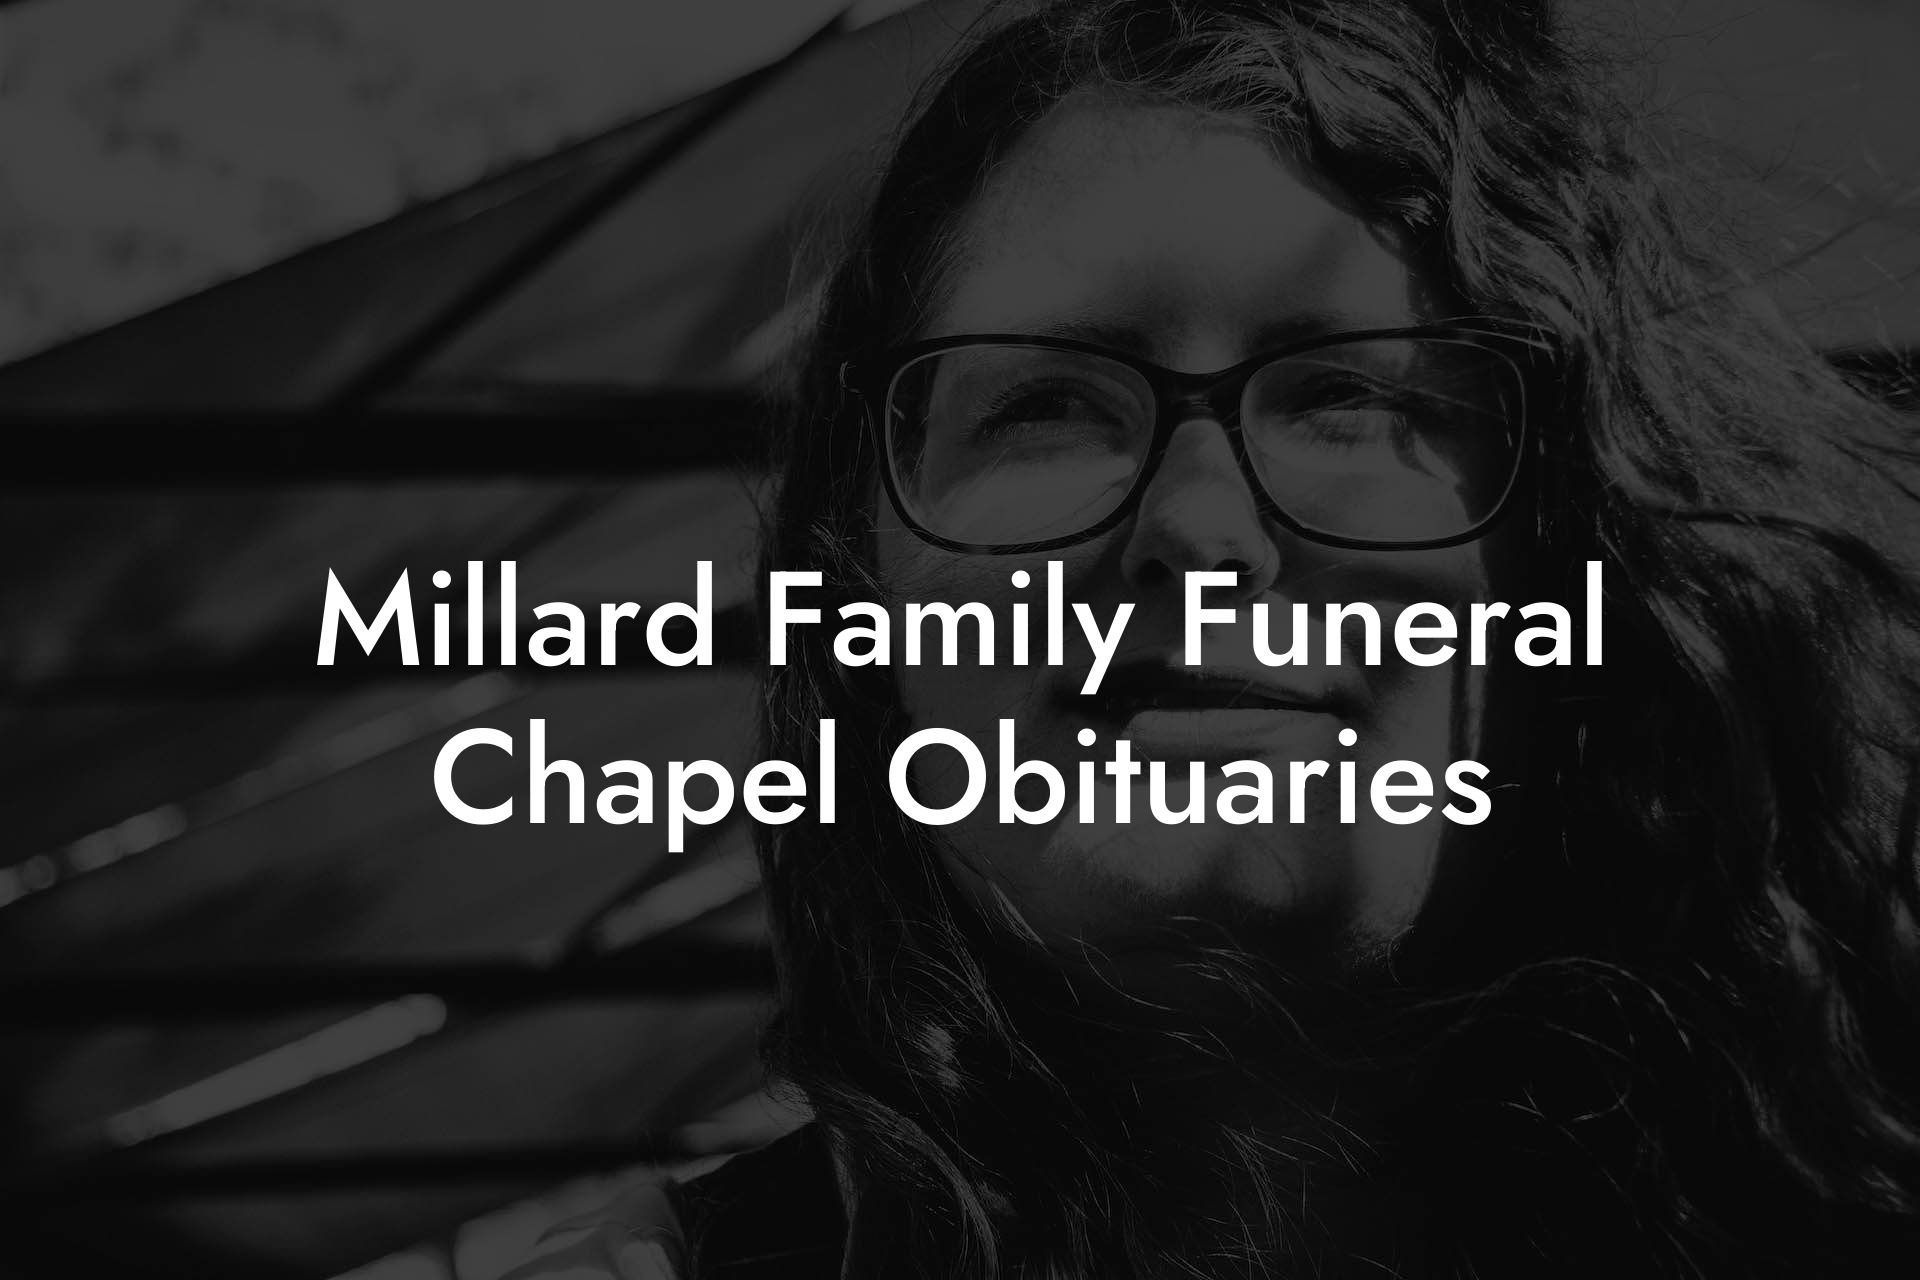 Millard Family Funeral Chapel Obituaries